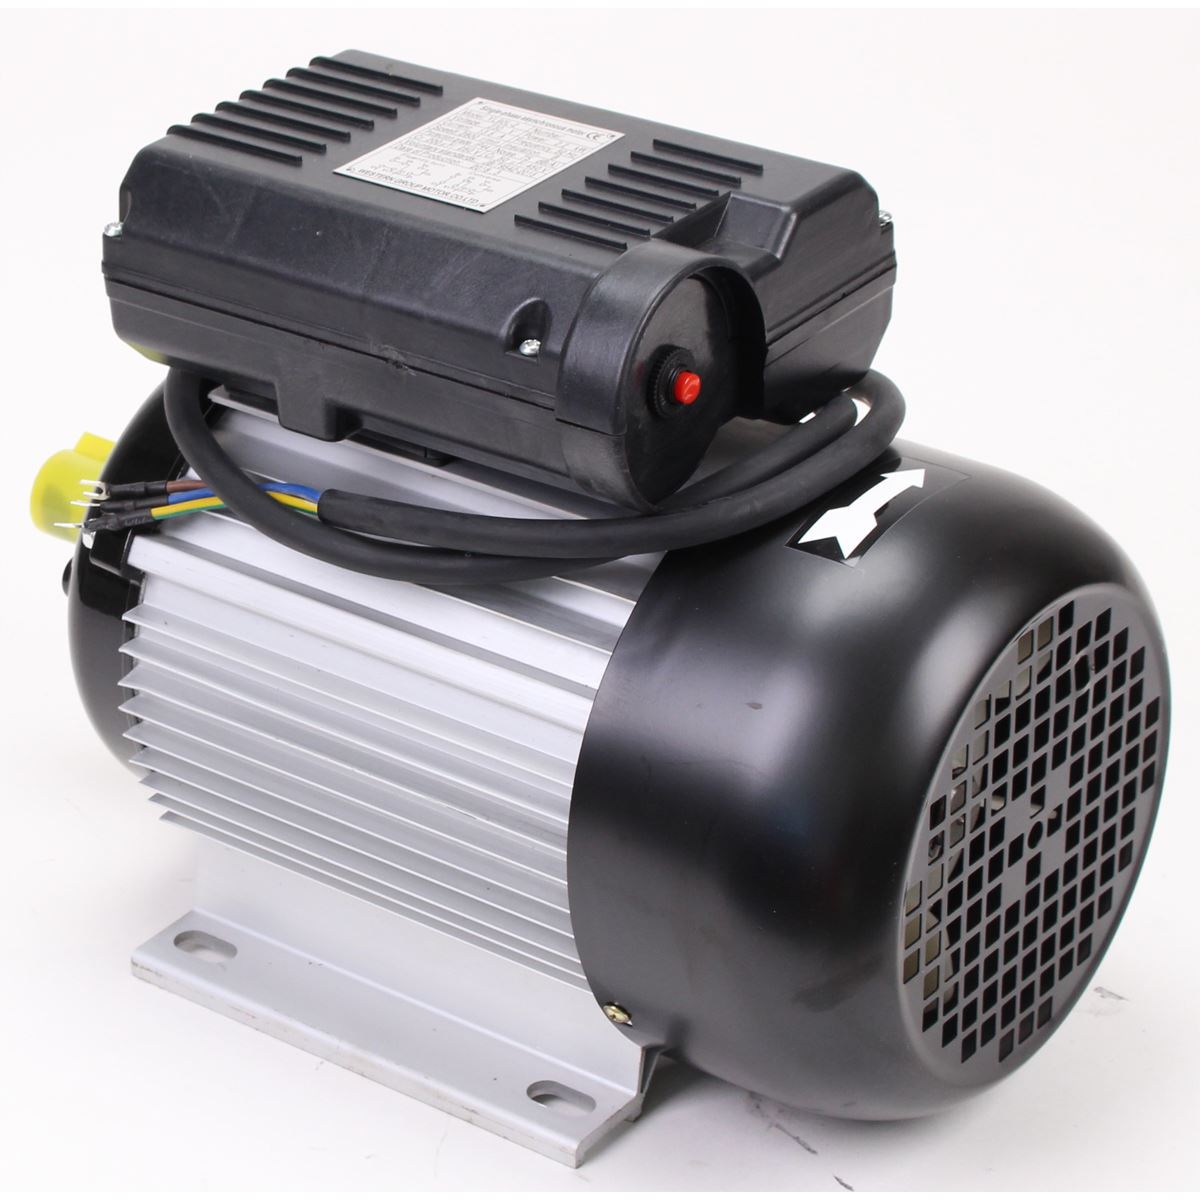 Sealey Premier Air compressor Electrical Motor 3hp 2.2kw